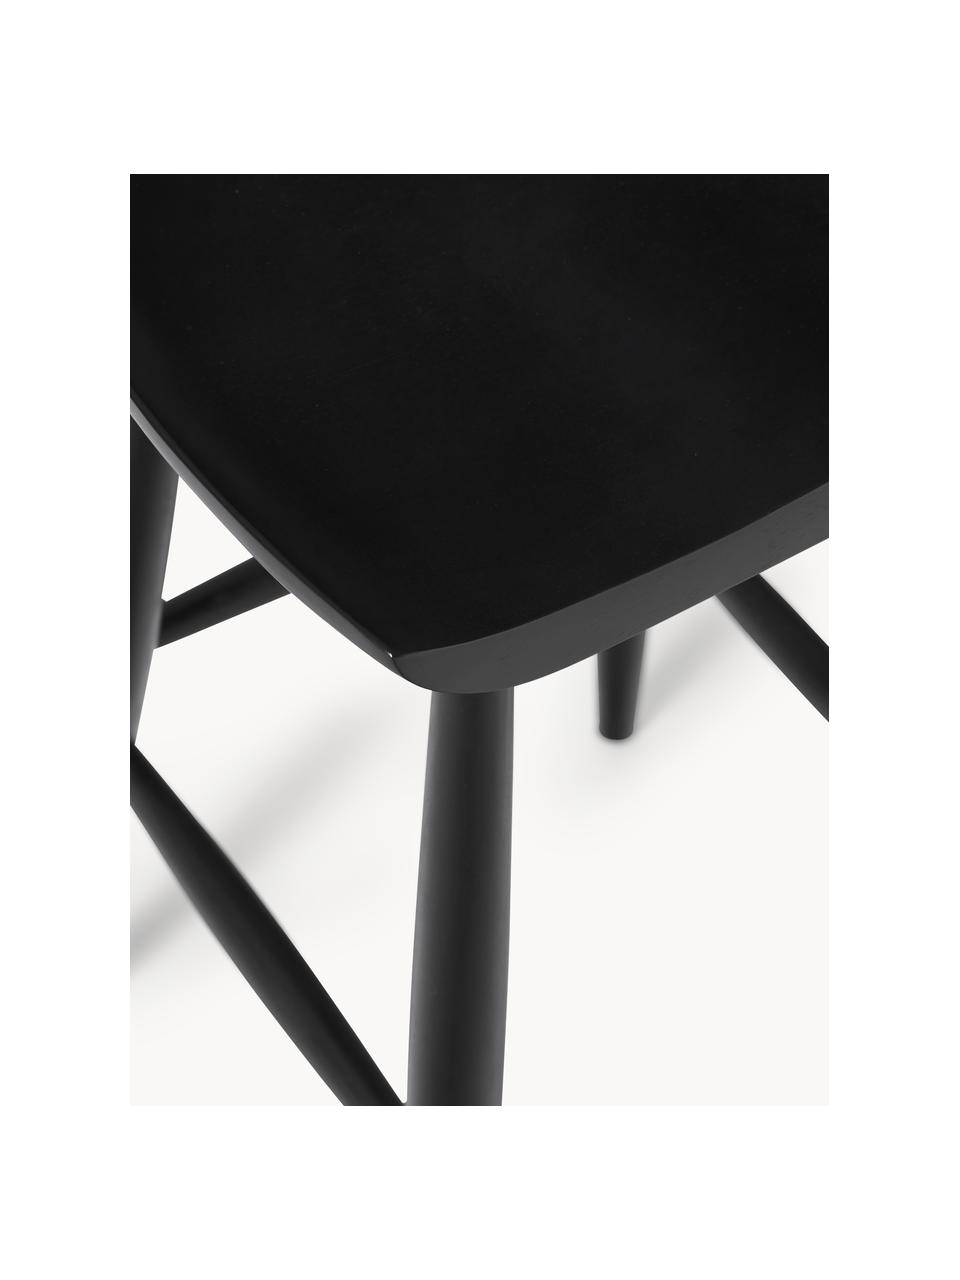 Barová židle z mangového dřeva Nino, 40 x 66 cm, Masivní lakované mangové dřevo, Mangové dřevo, lakované černou barvou, Š 40 cm, V 66 cm